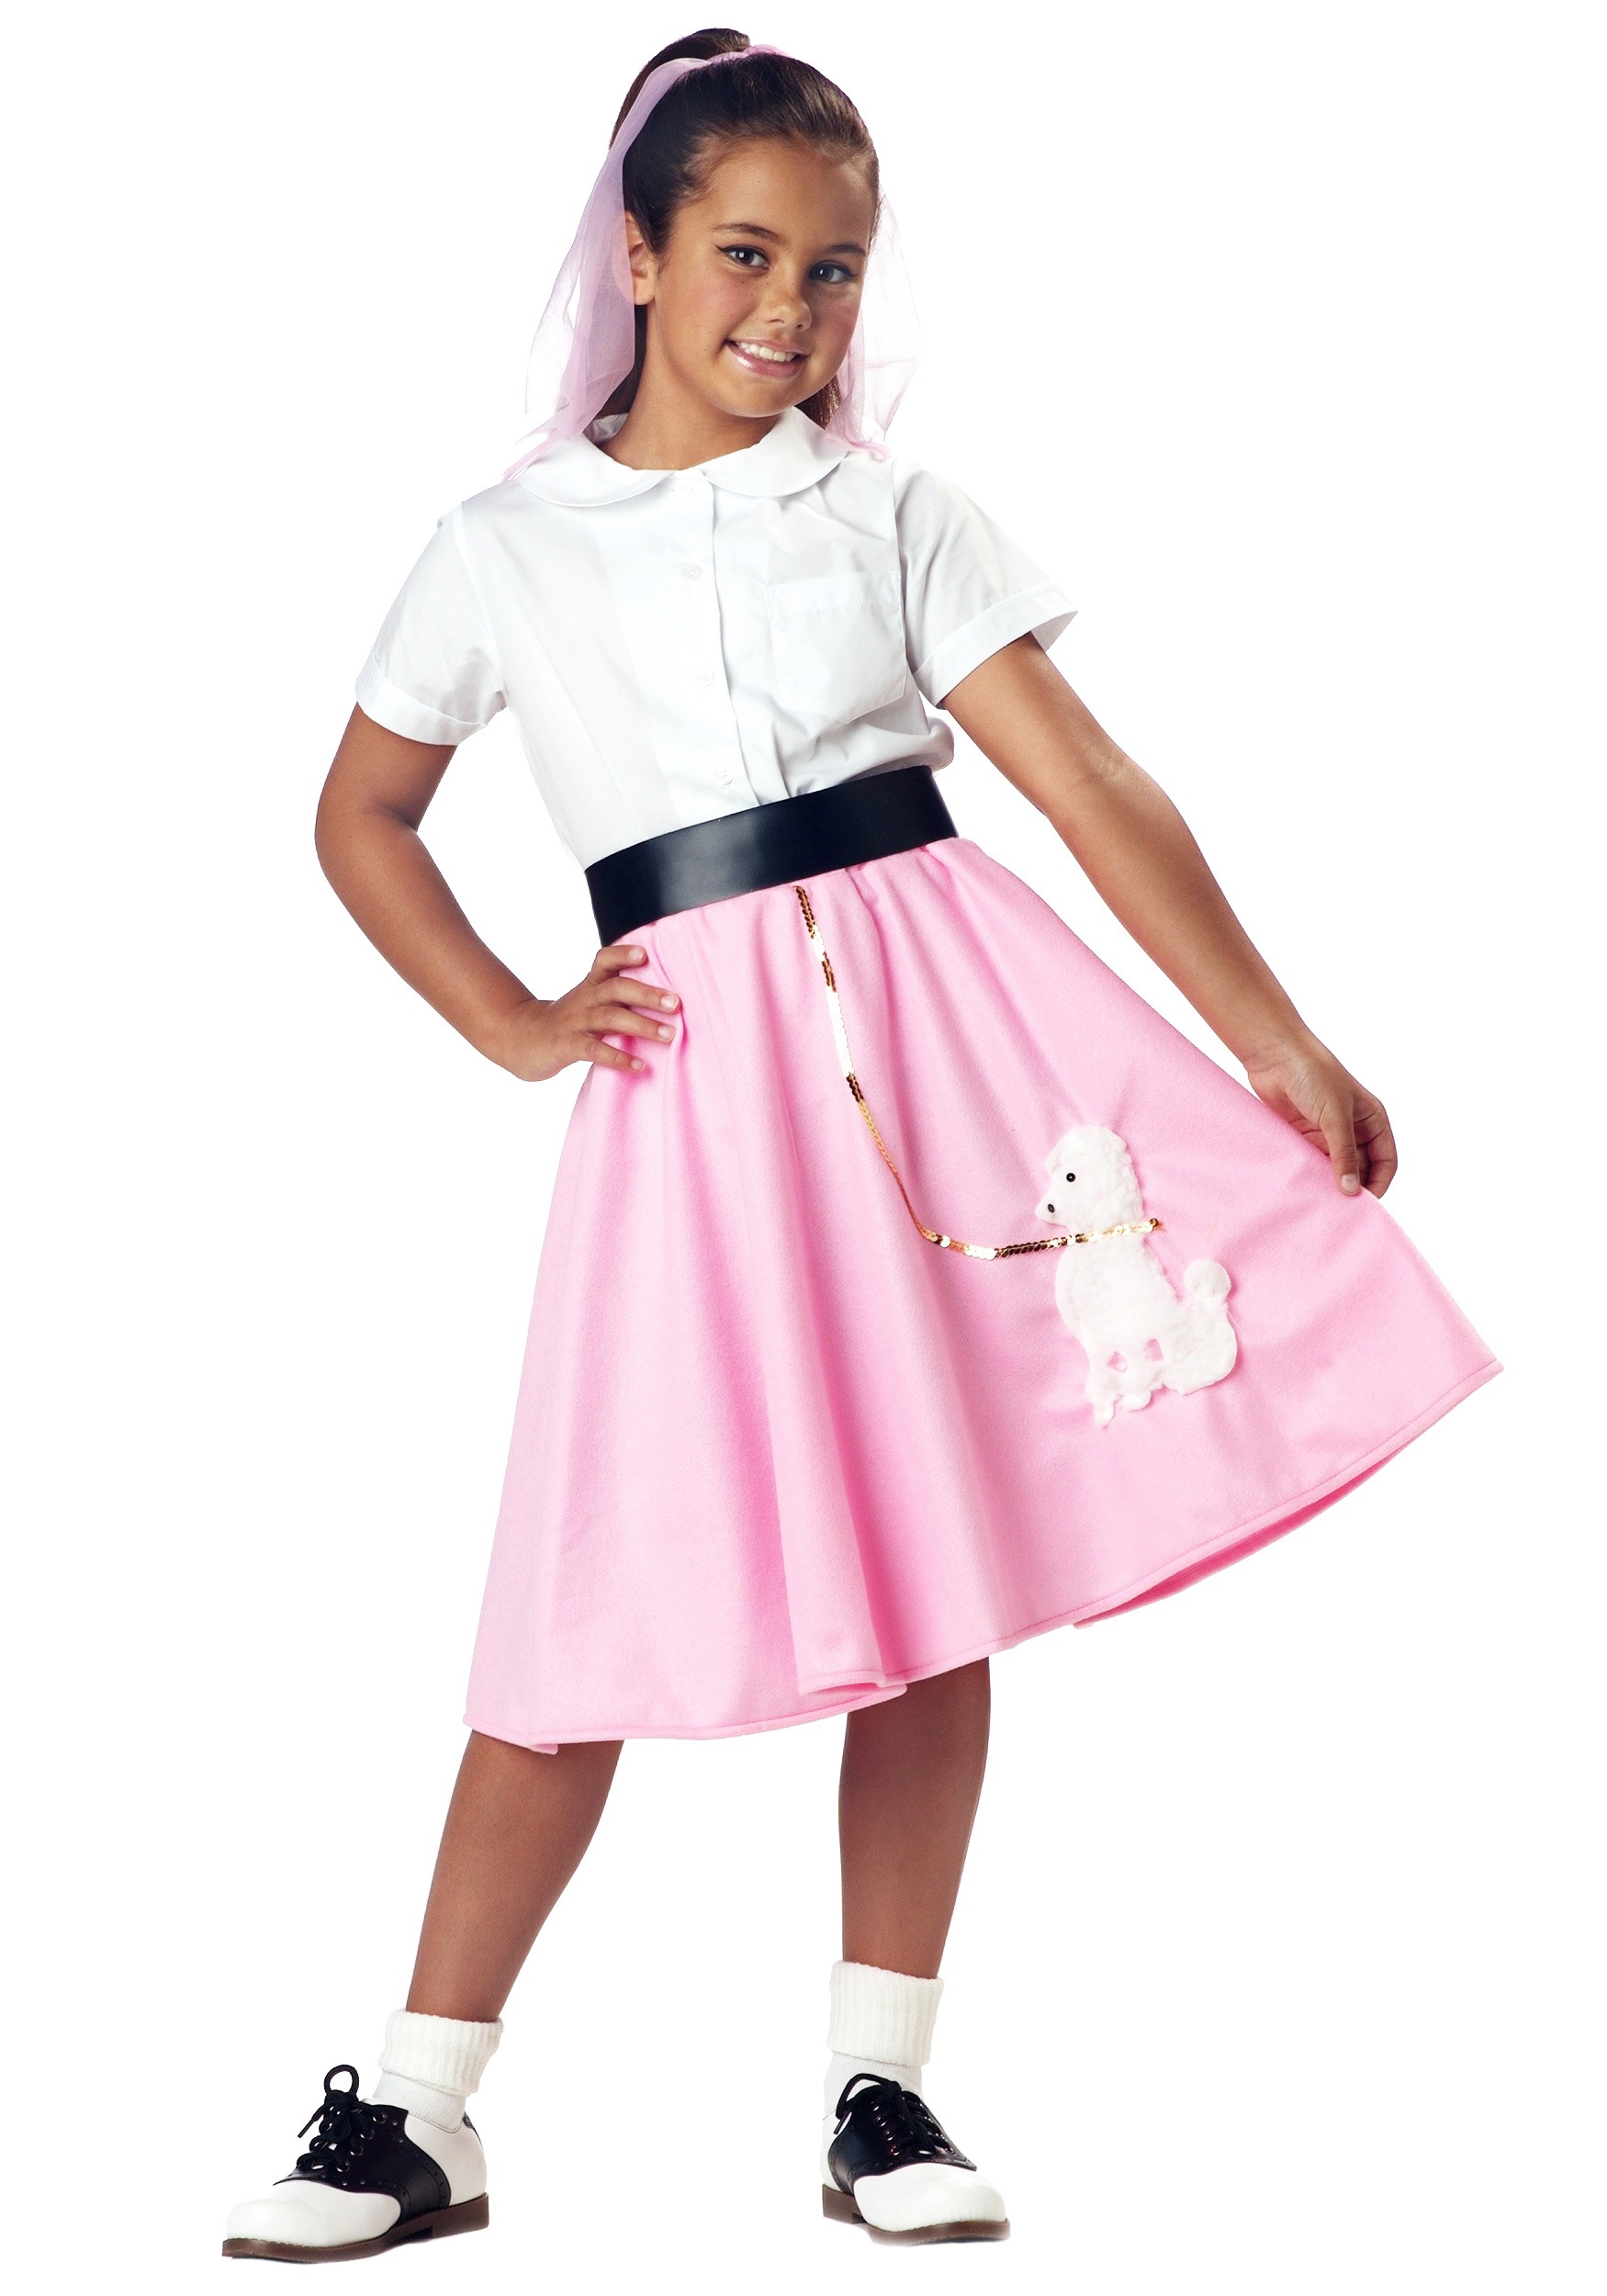 Pink Poodle Skirt Costume for Kids